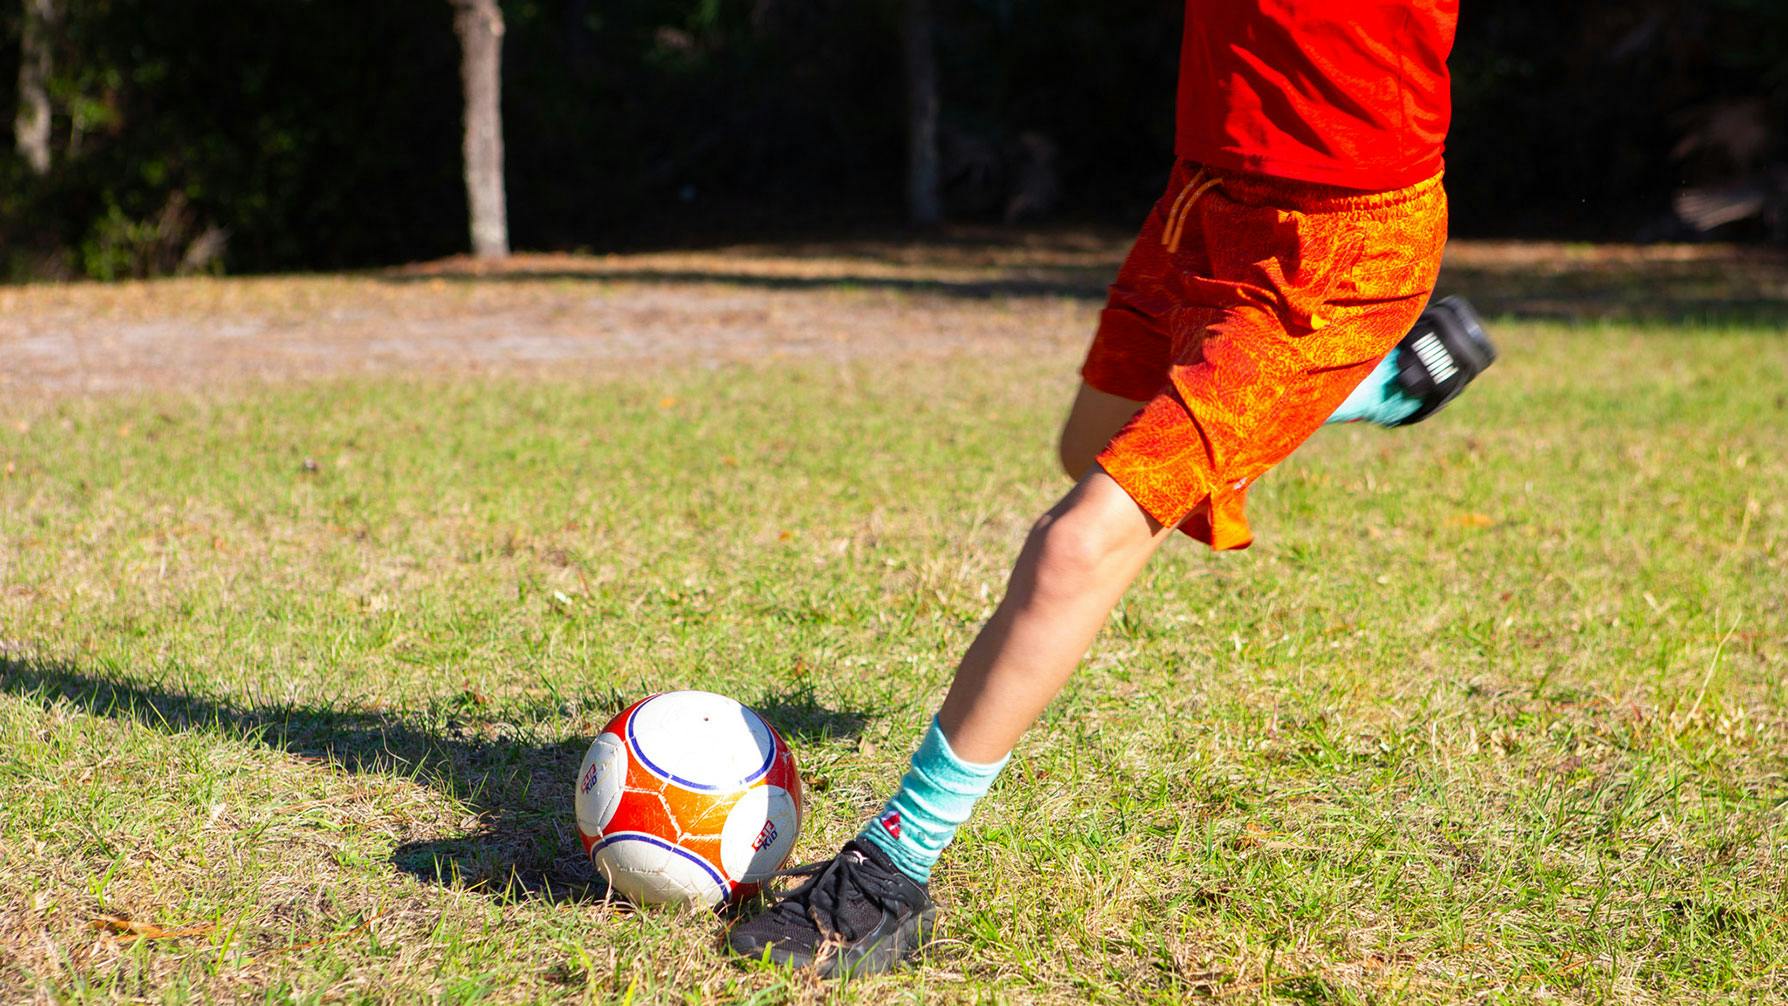 Kid kicking a soccer ball